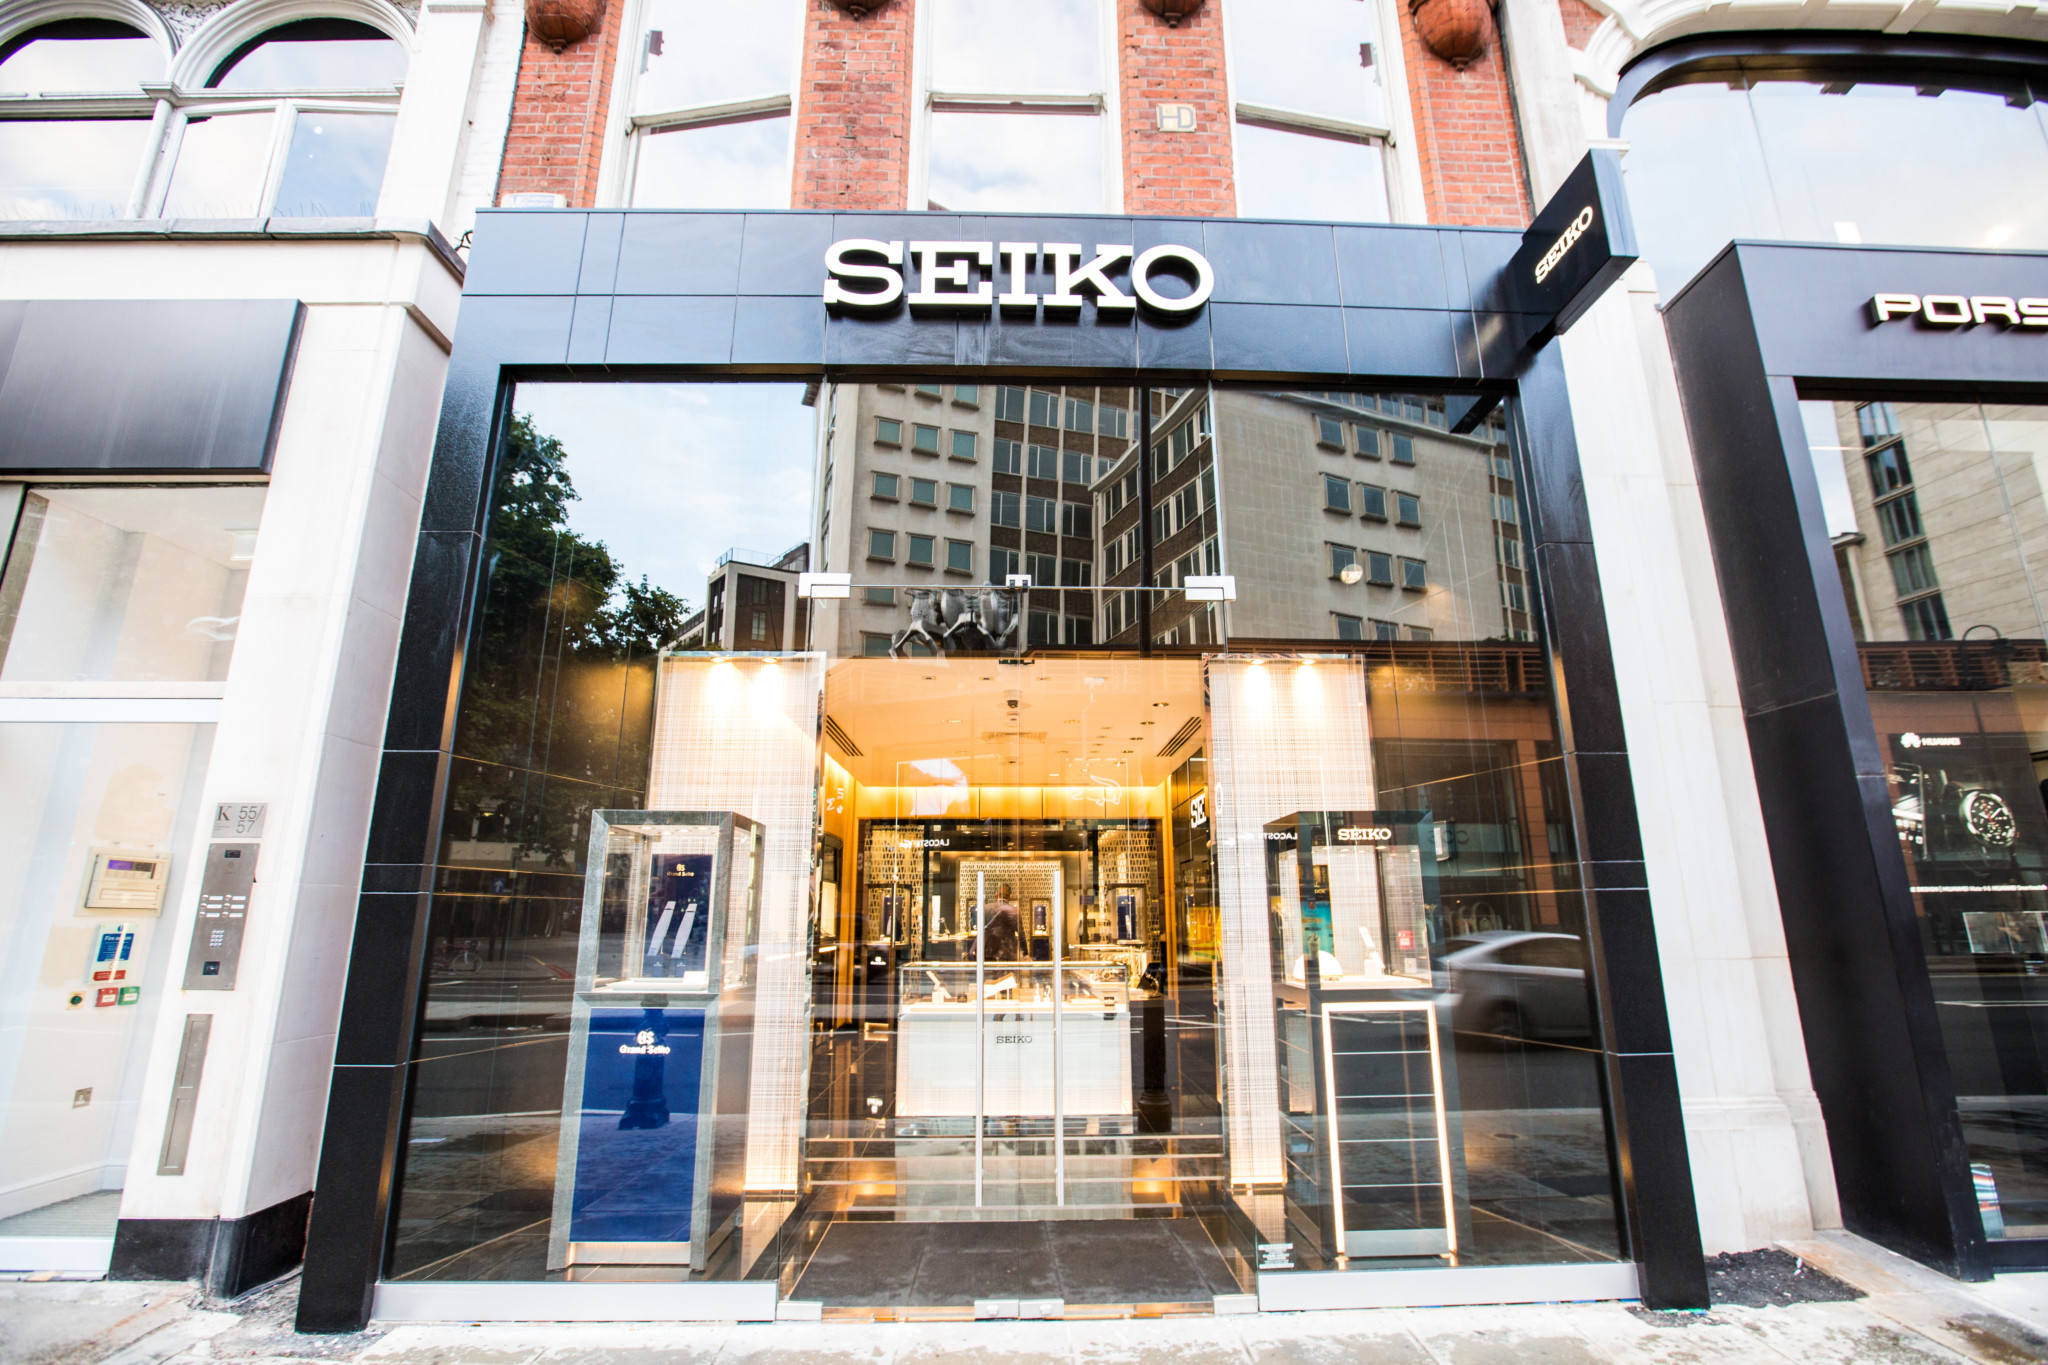 Seiko boutique exterior